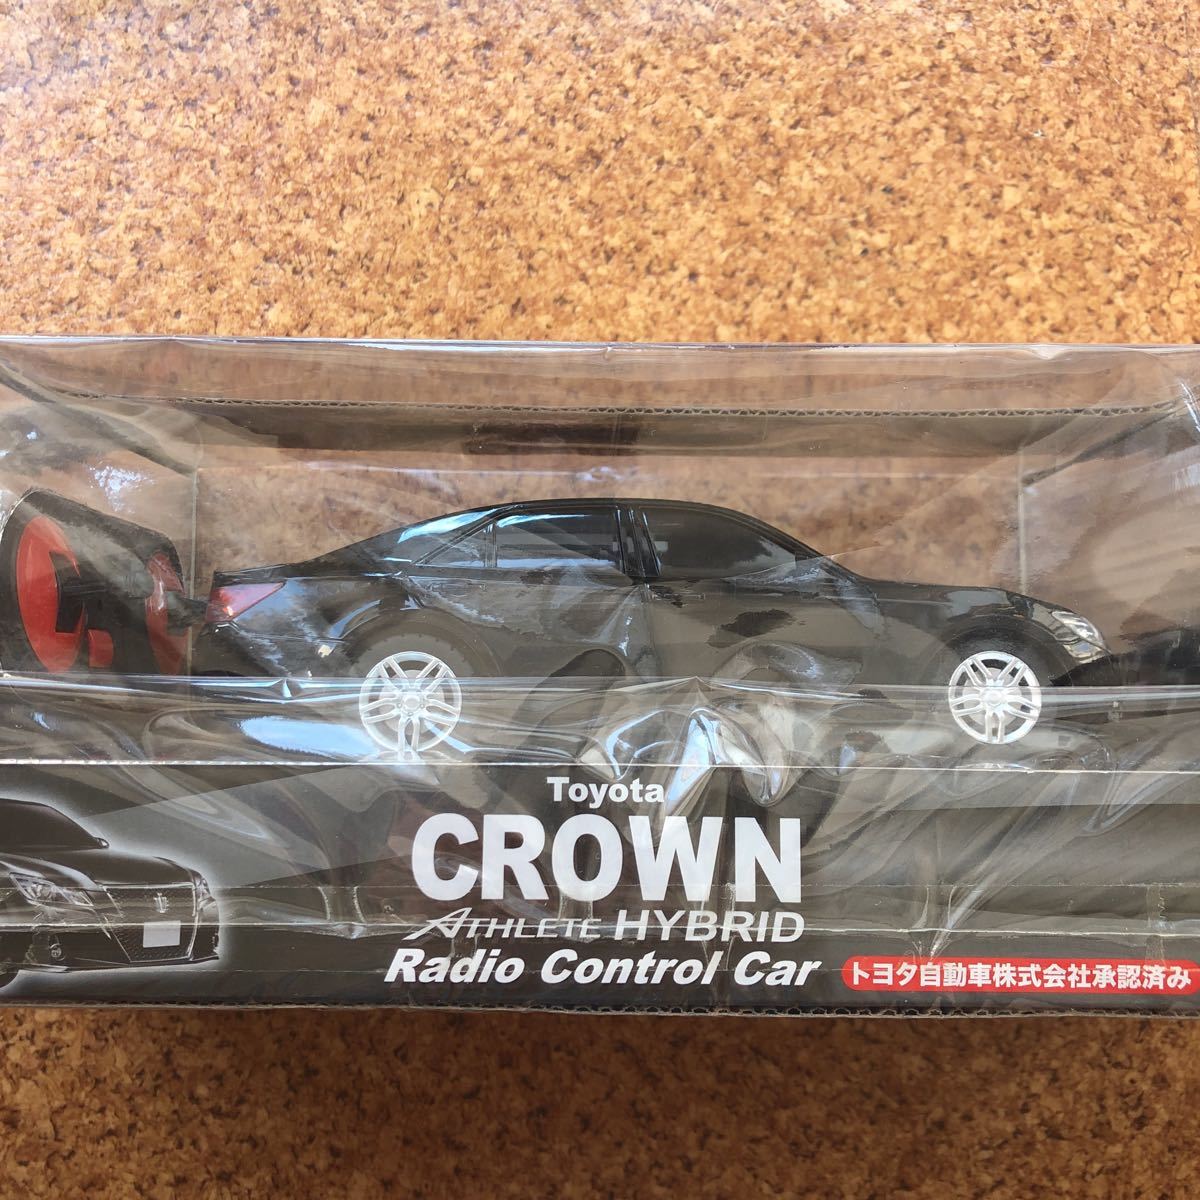 CROWN ATHLETE HYBRID Toyota Crown Athlete hybrid Reborn black black color 